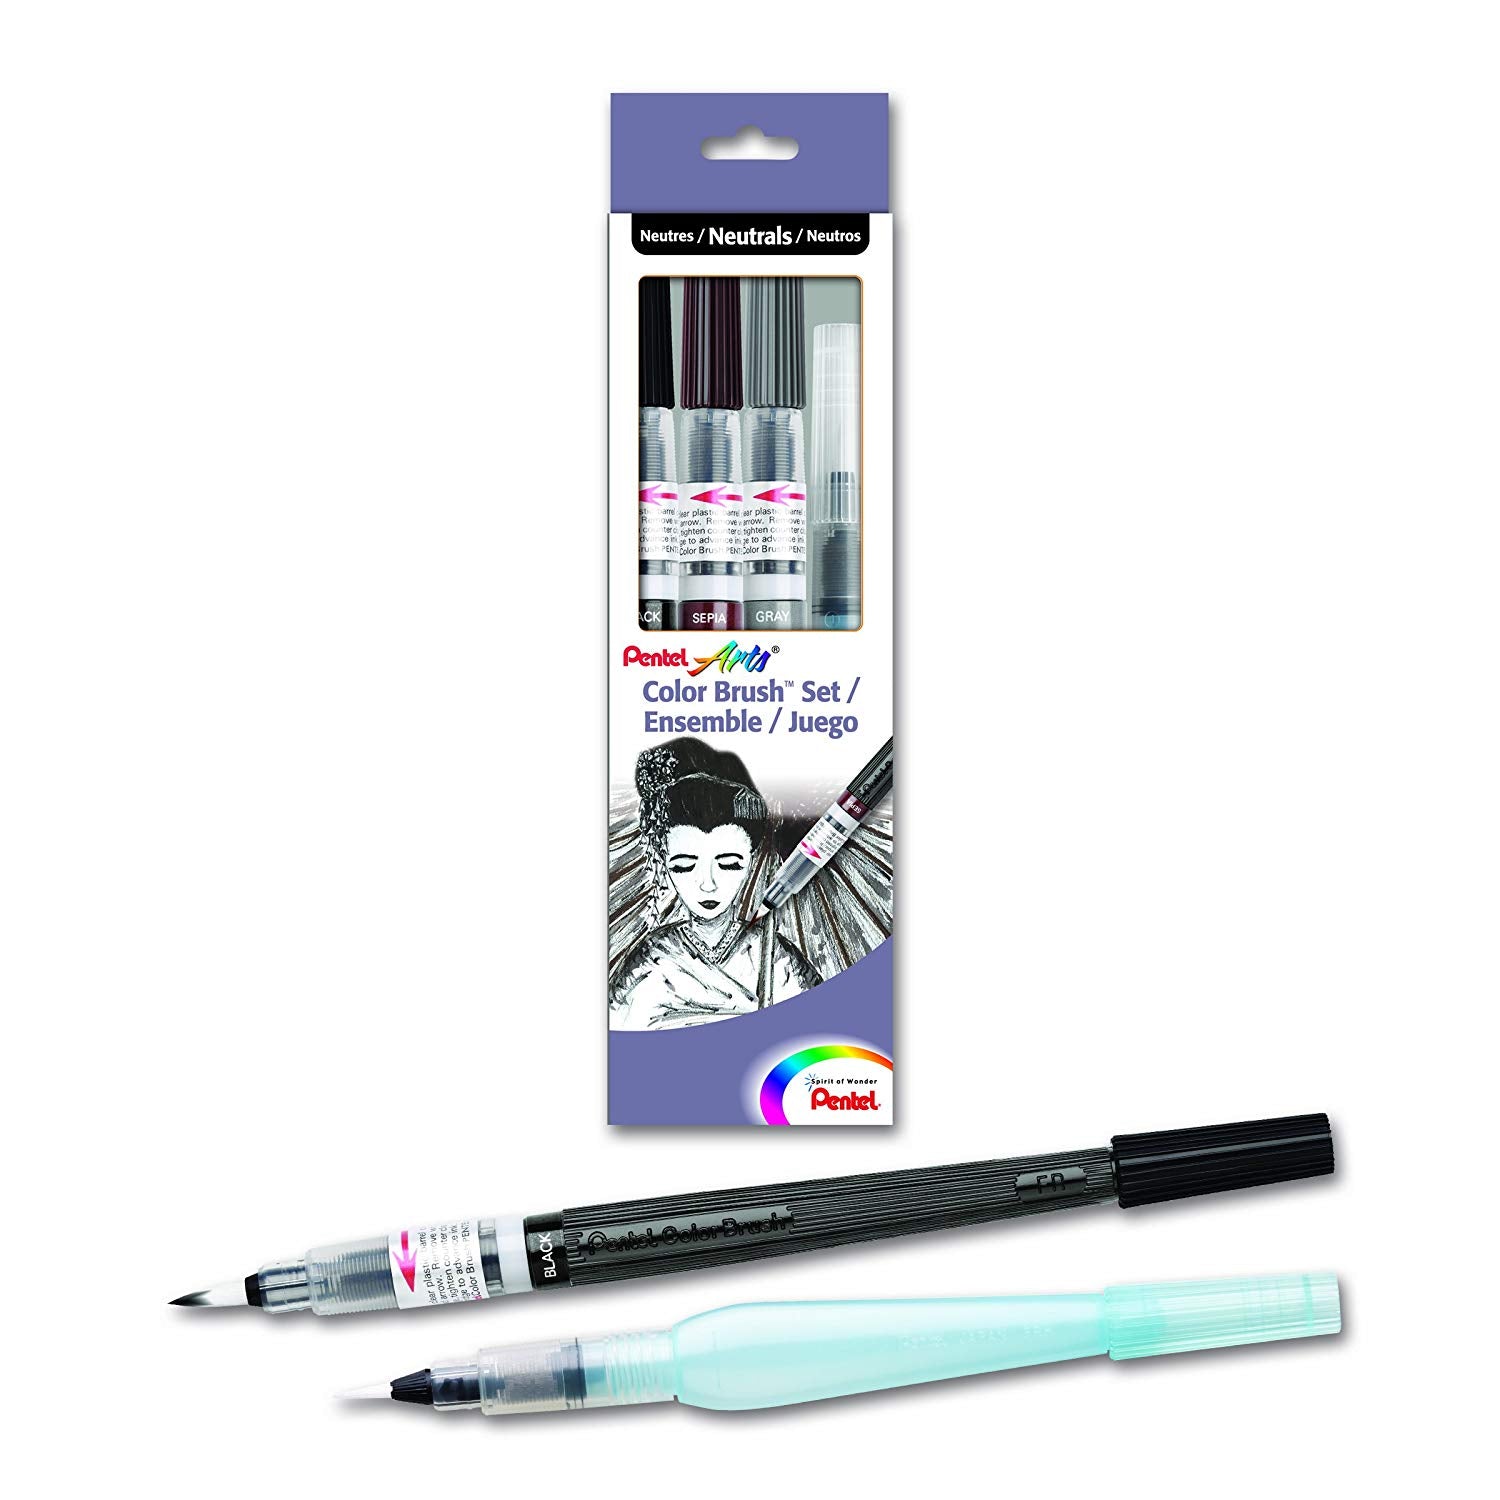 Pentel GFLFRHBP Arts Color Brush Pen Set, 4-Pack, Assorted Colors in Black, Red, Gray, Sepia